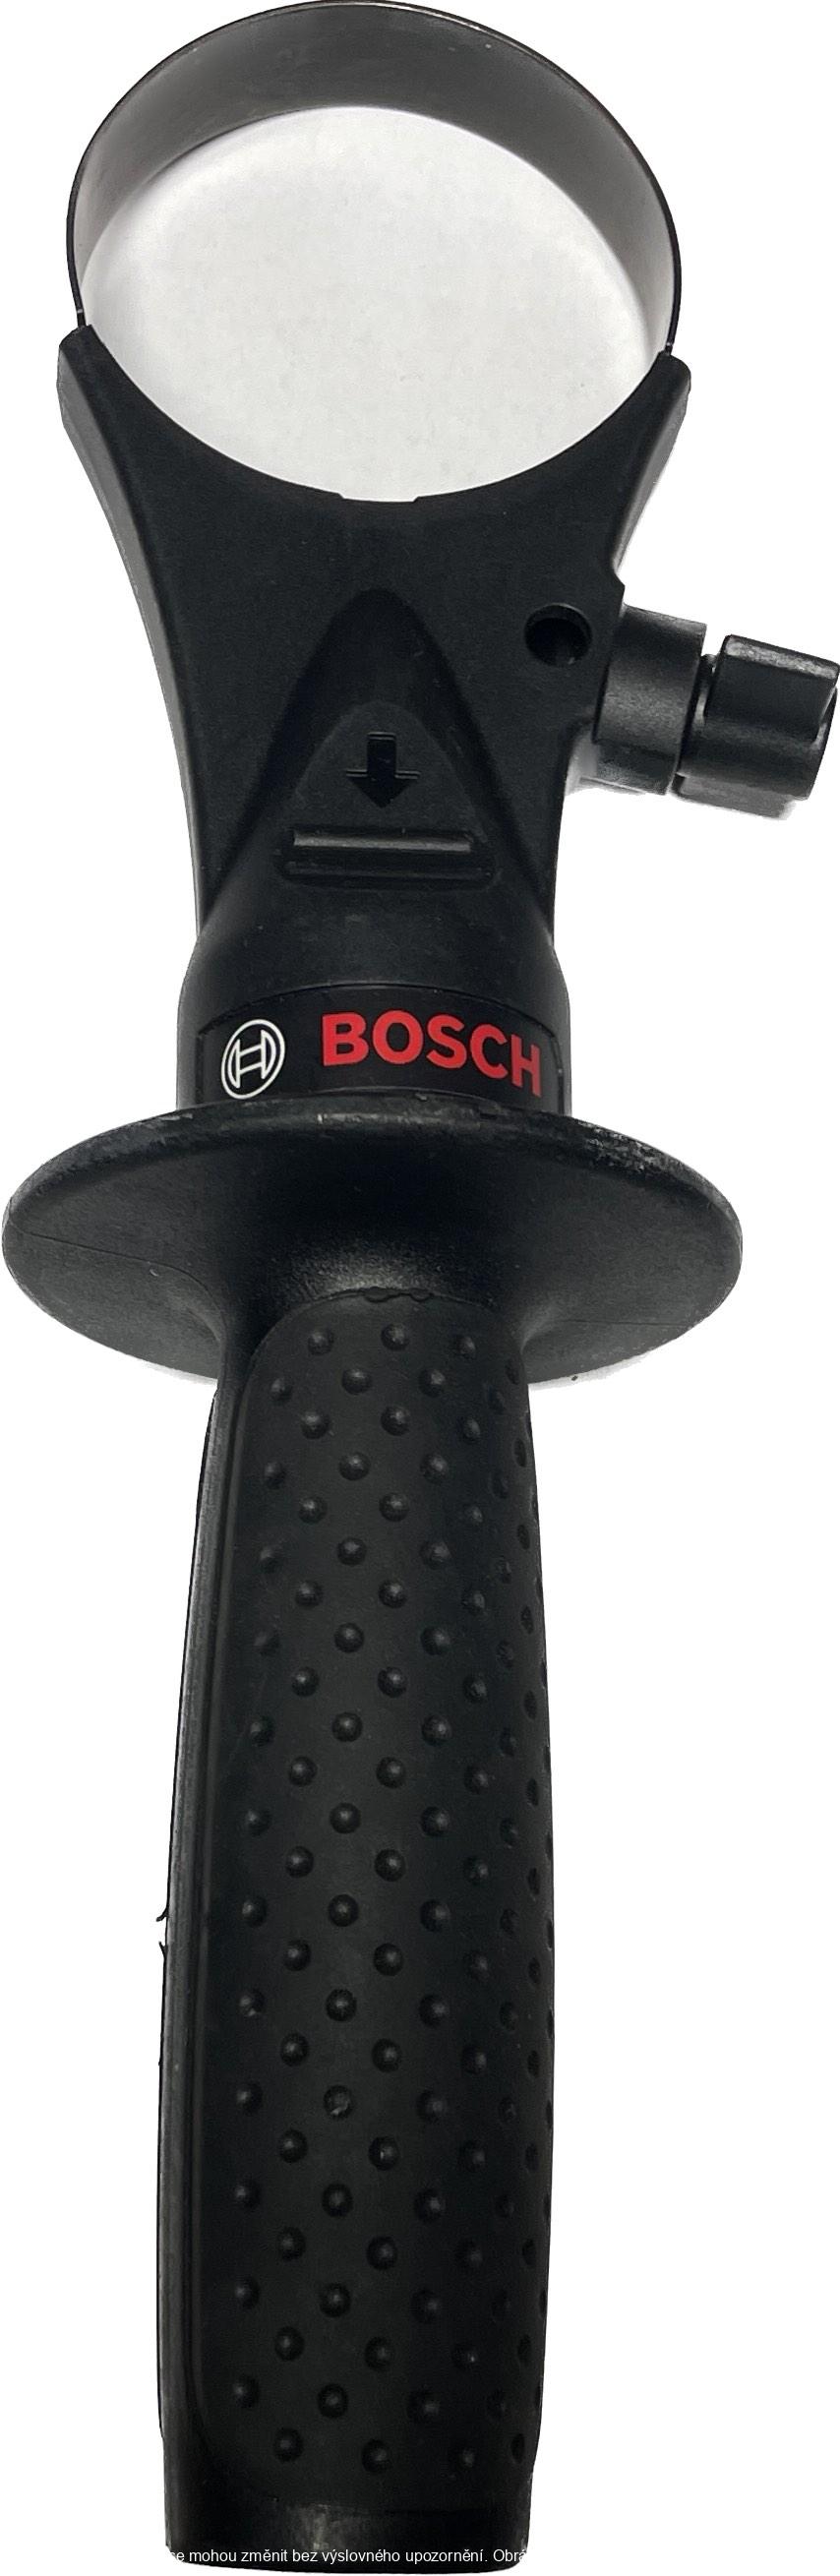 Bosch PA6-GF50 pomocná rukojeť vrtačky s hloubkovým dorazem